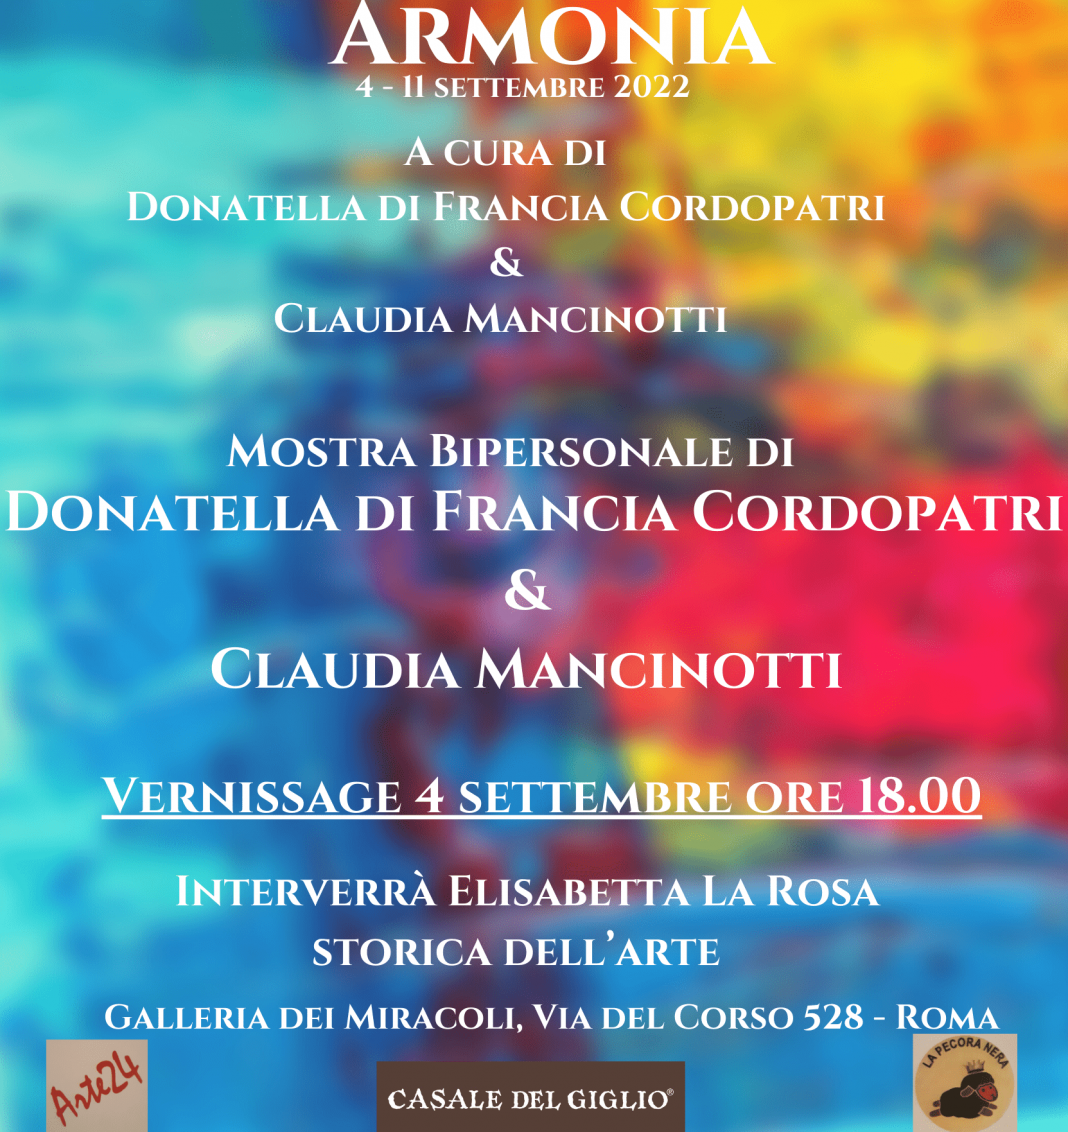 Donatella Di Francia Cordopatri / Claudia Mancinotti – Armoniahttps://www.exibart.com/repository/media/formidable/11/img/2a9/Locandina-Armonia-min-1068x1132.png